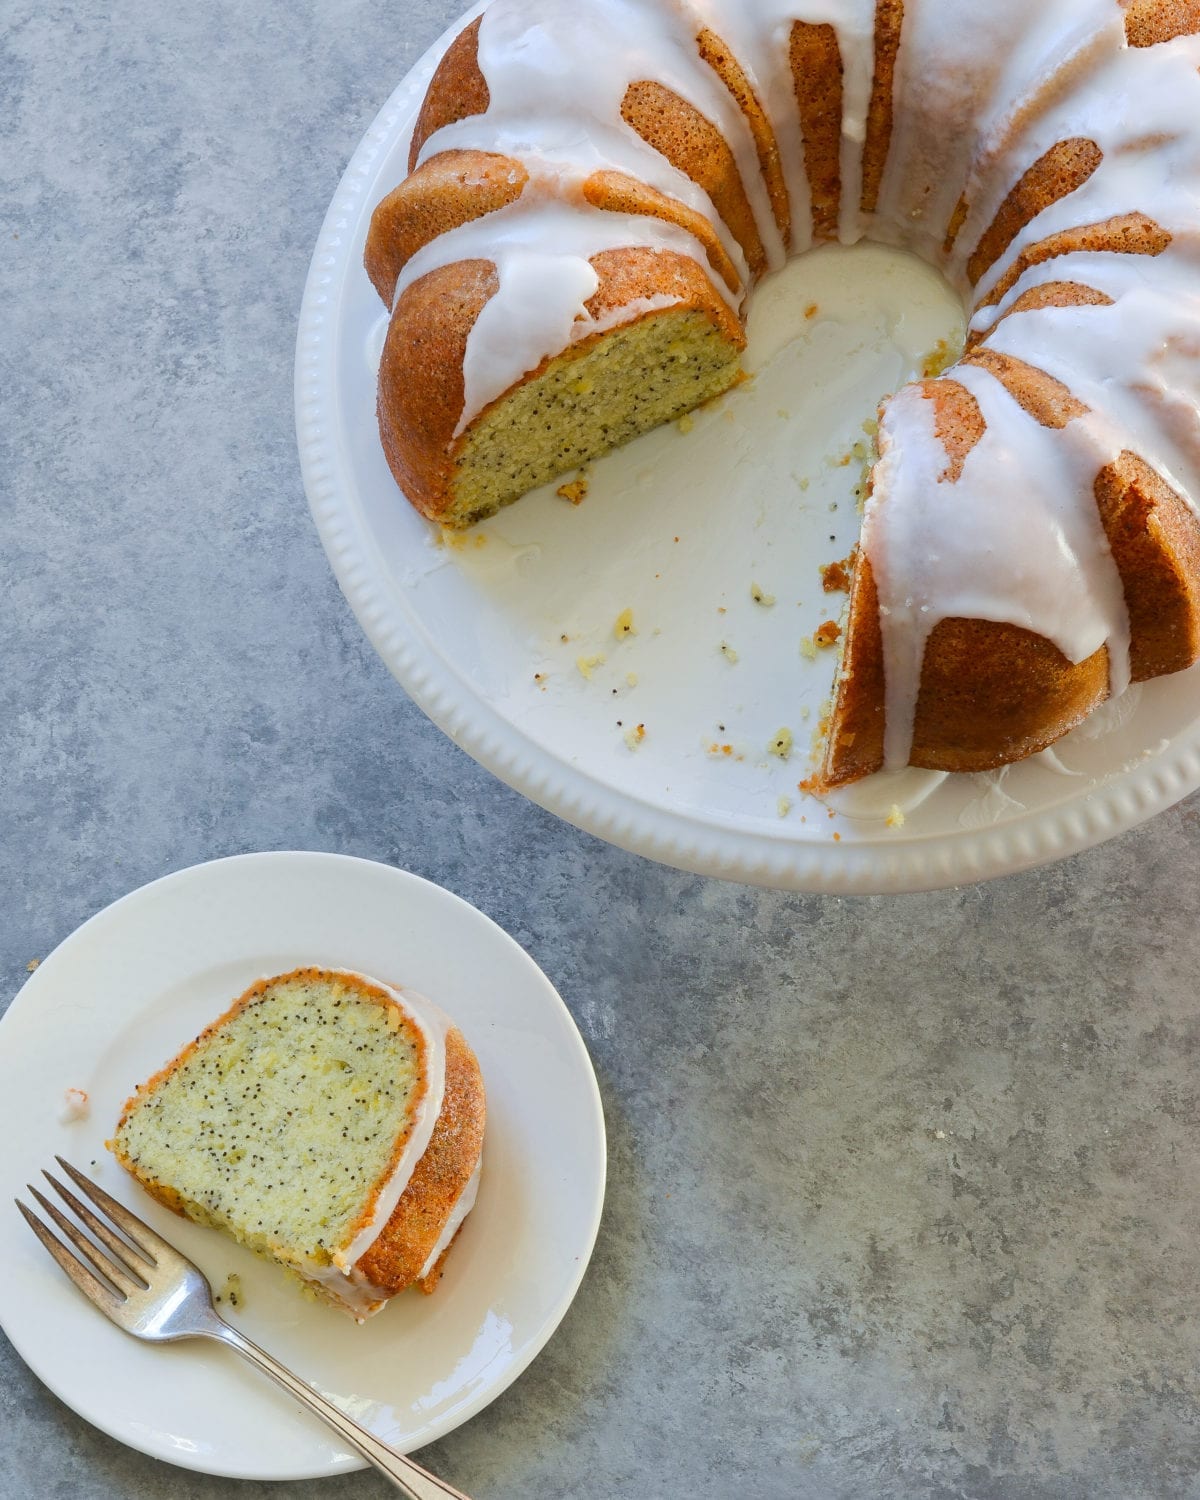 Glazed lemon poppy seed cake on a platter with slices missing.